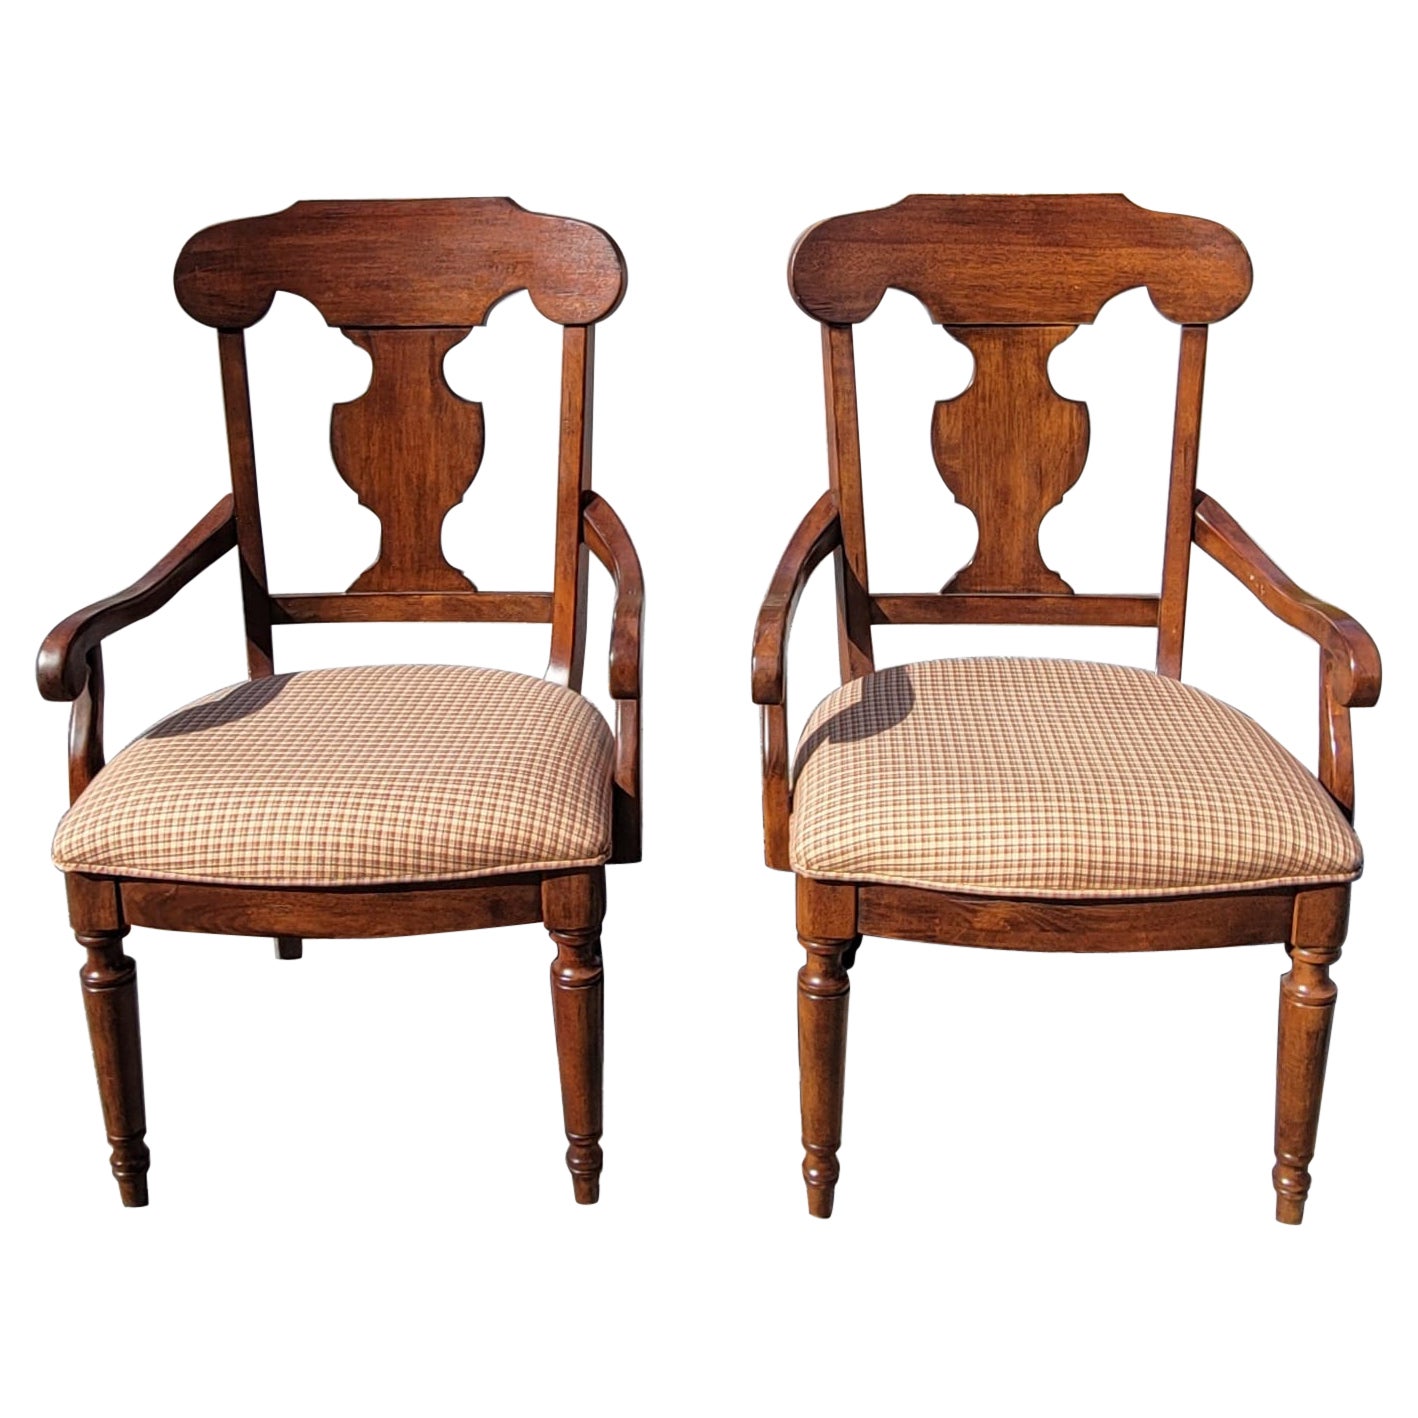 Gepolsterte Sessel aus Obstholz des späten 20. Jahrhunderts